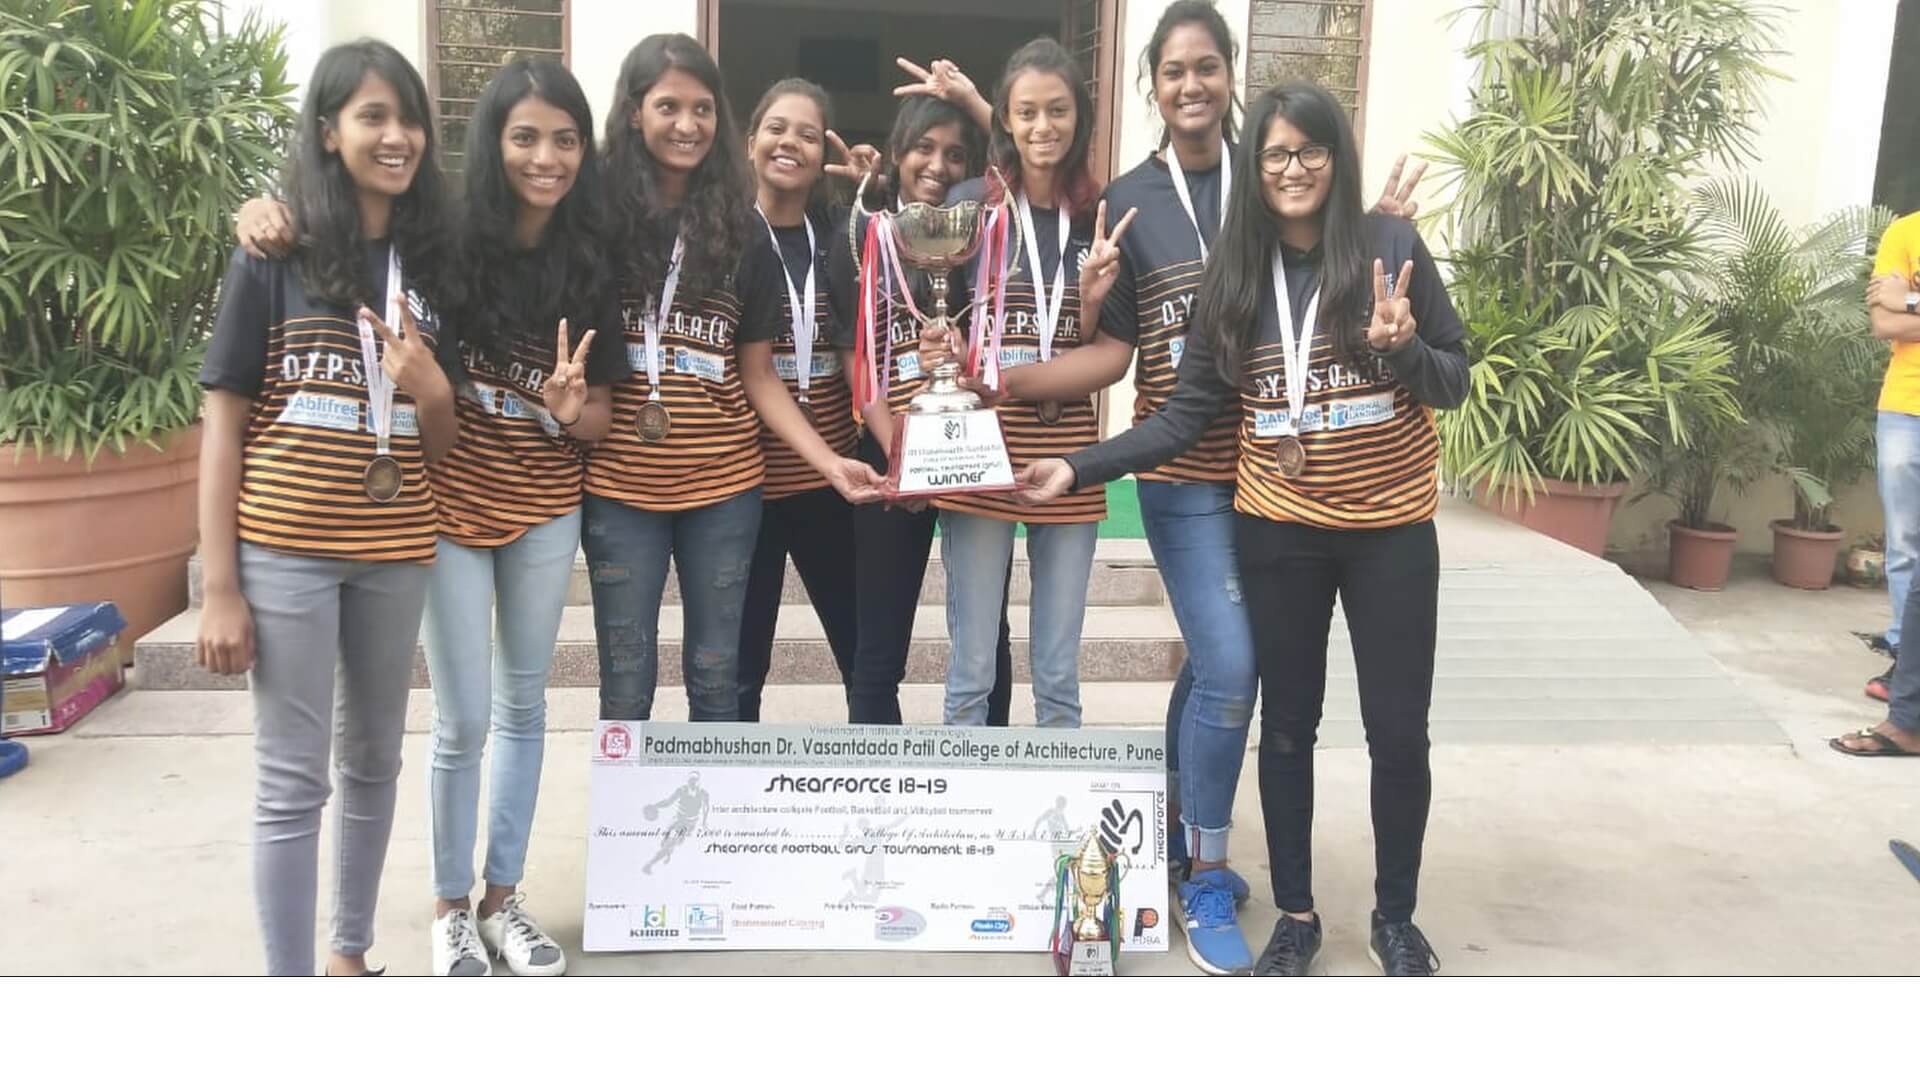 Winners of SHEARFORCE Football Girls Tournament 2018-19